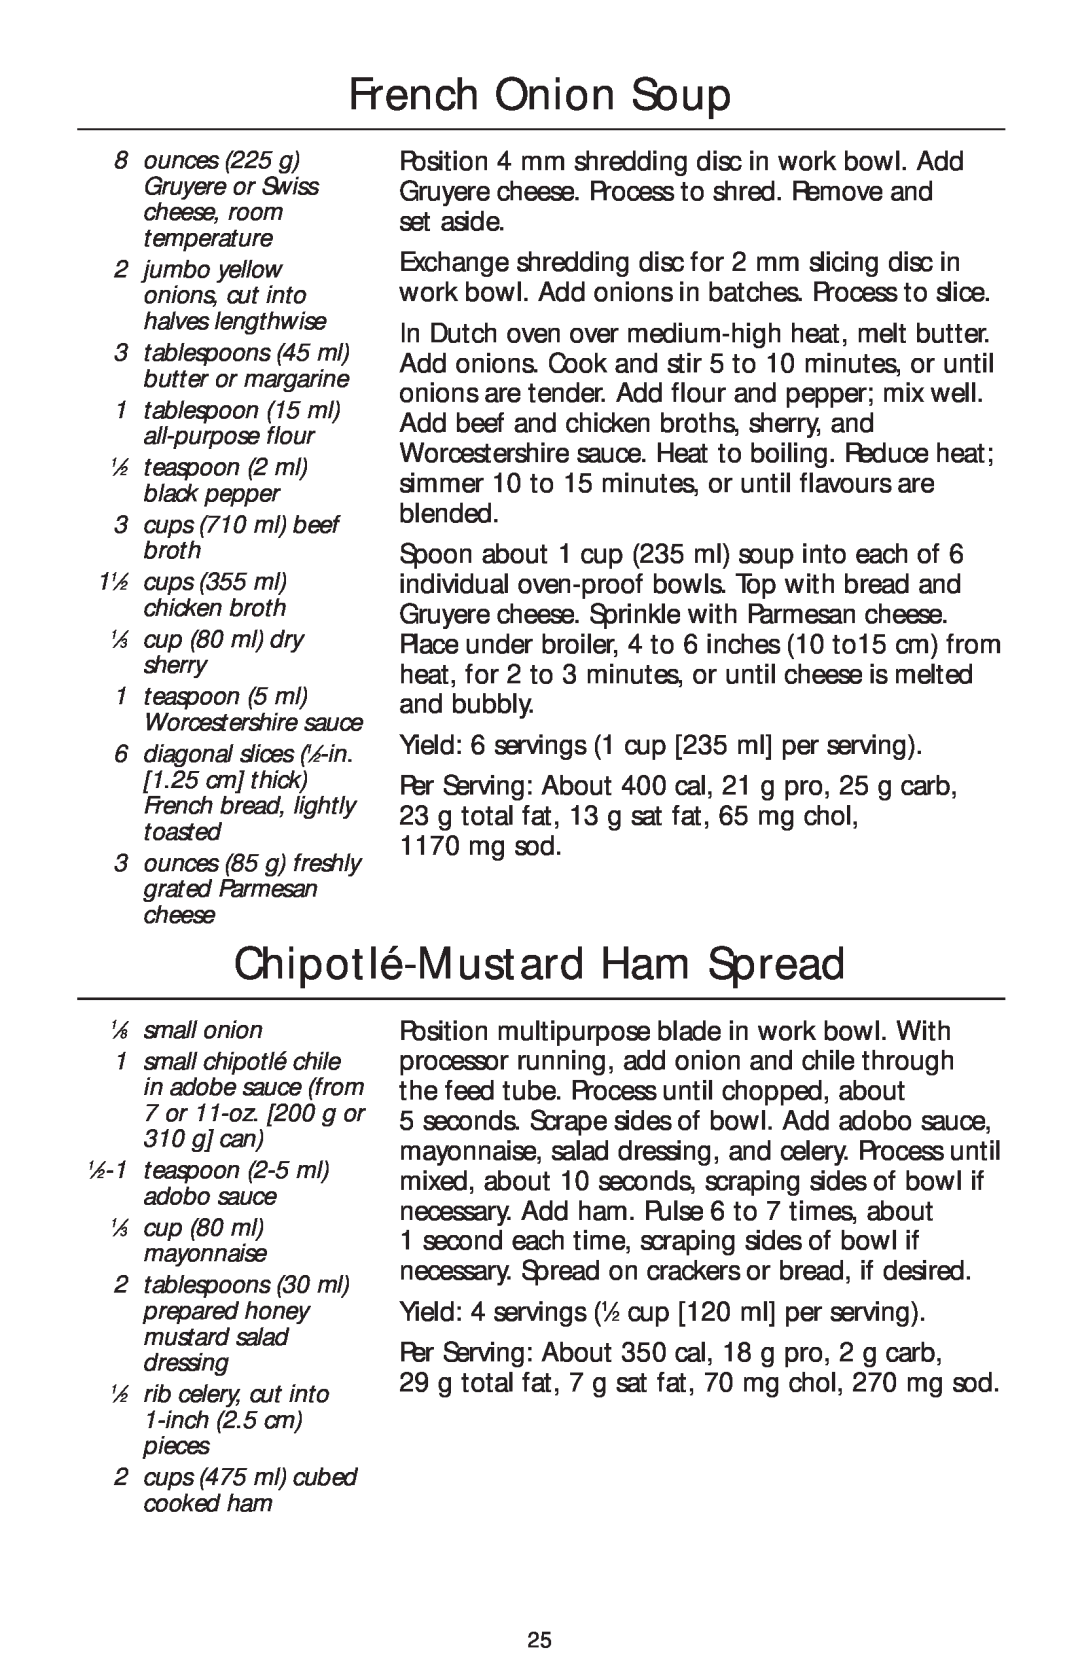 KitchenAid 4KFP740 manual French Onion Soup, Chipotlé-Mustard Ham Spread 